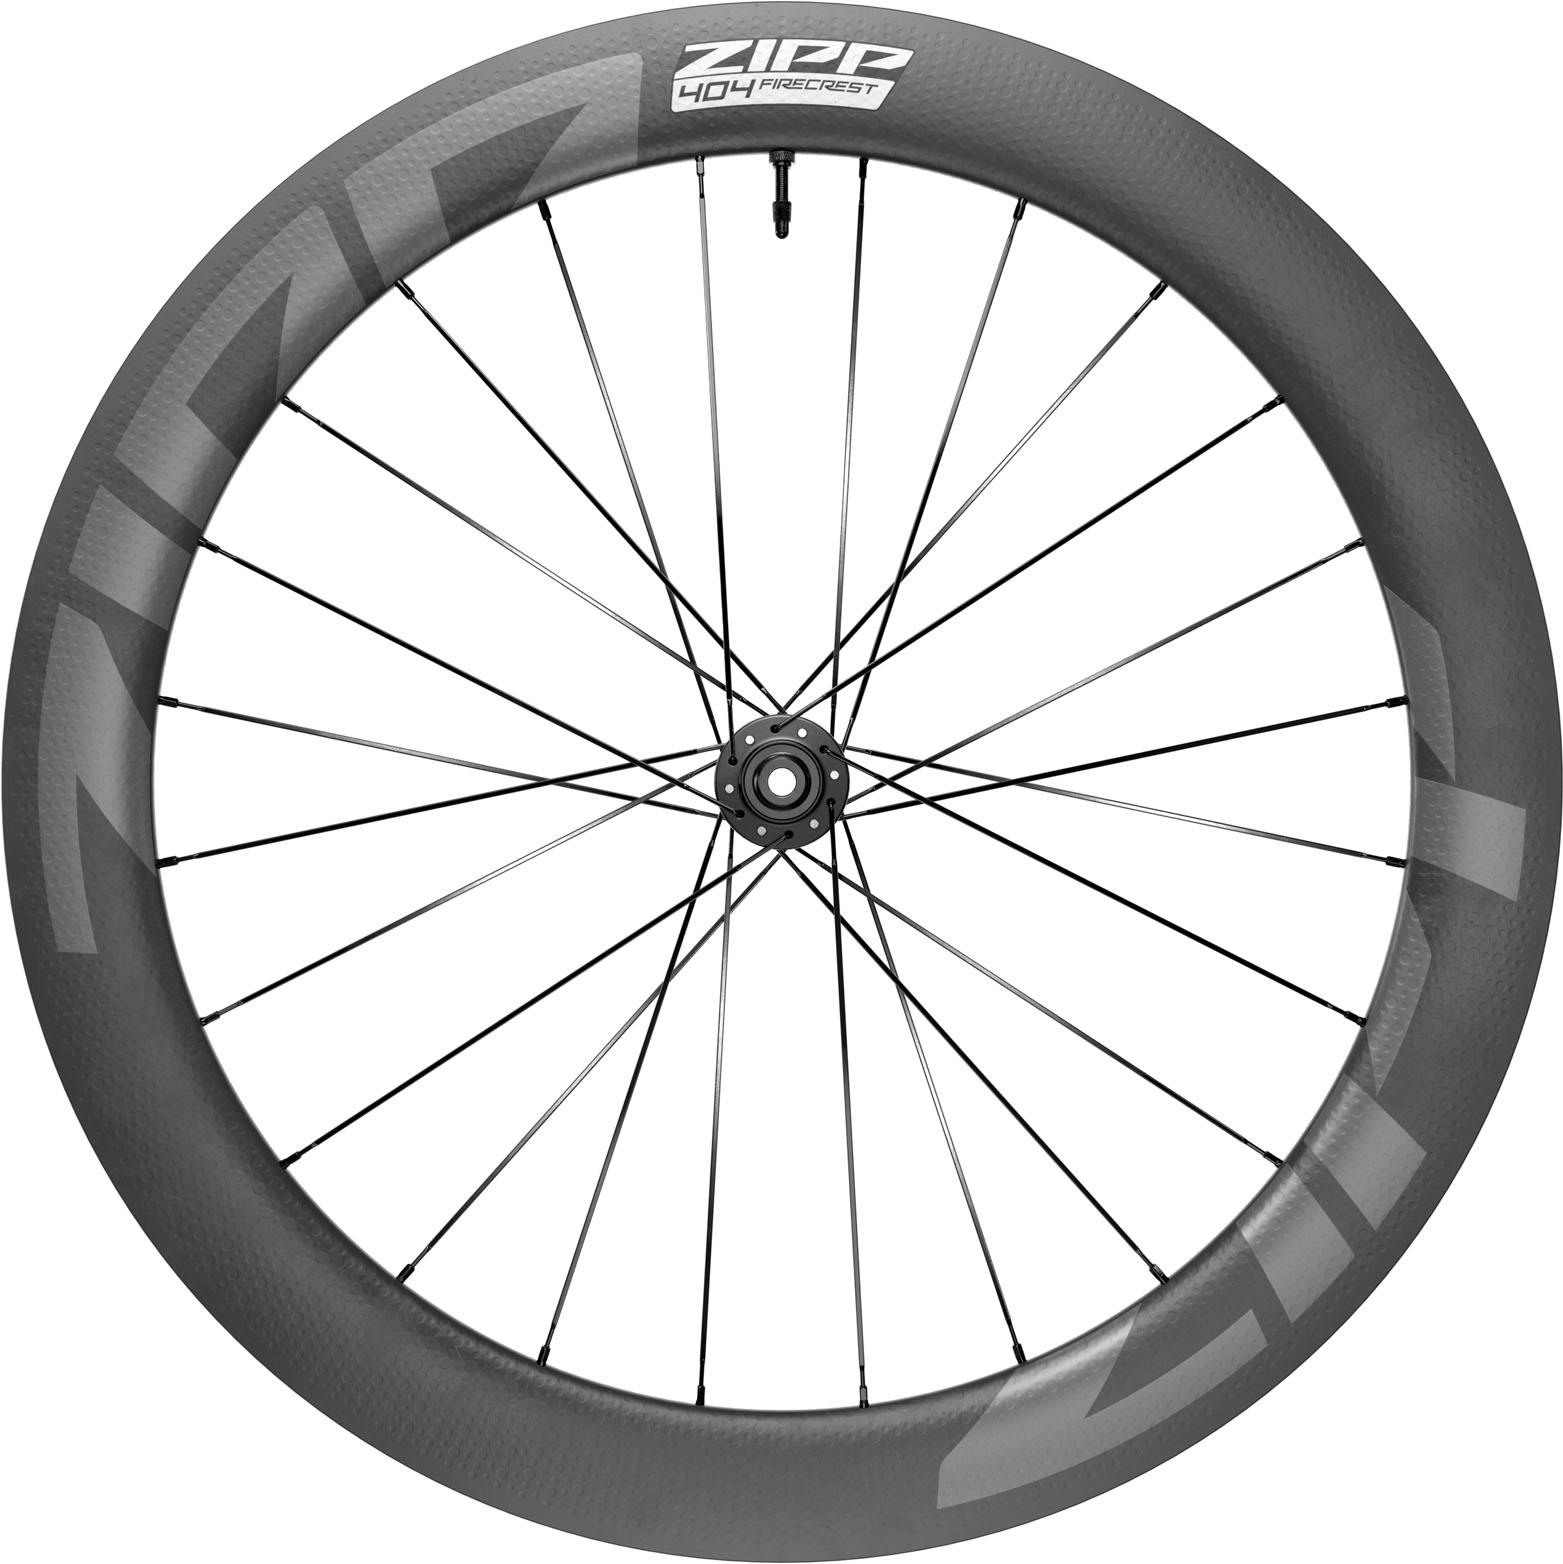 Zipp 404 Firecrest Carbon Tl Disc Front Wheel 2021  Black